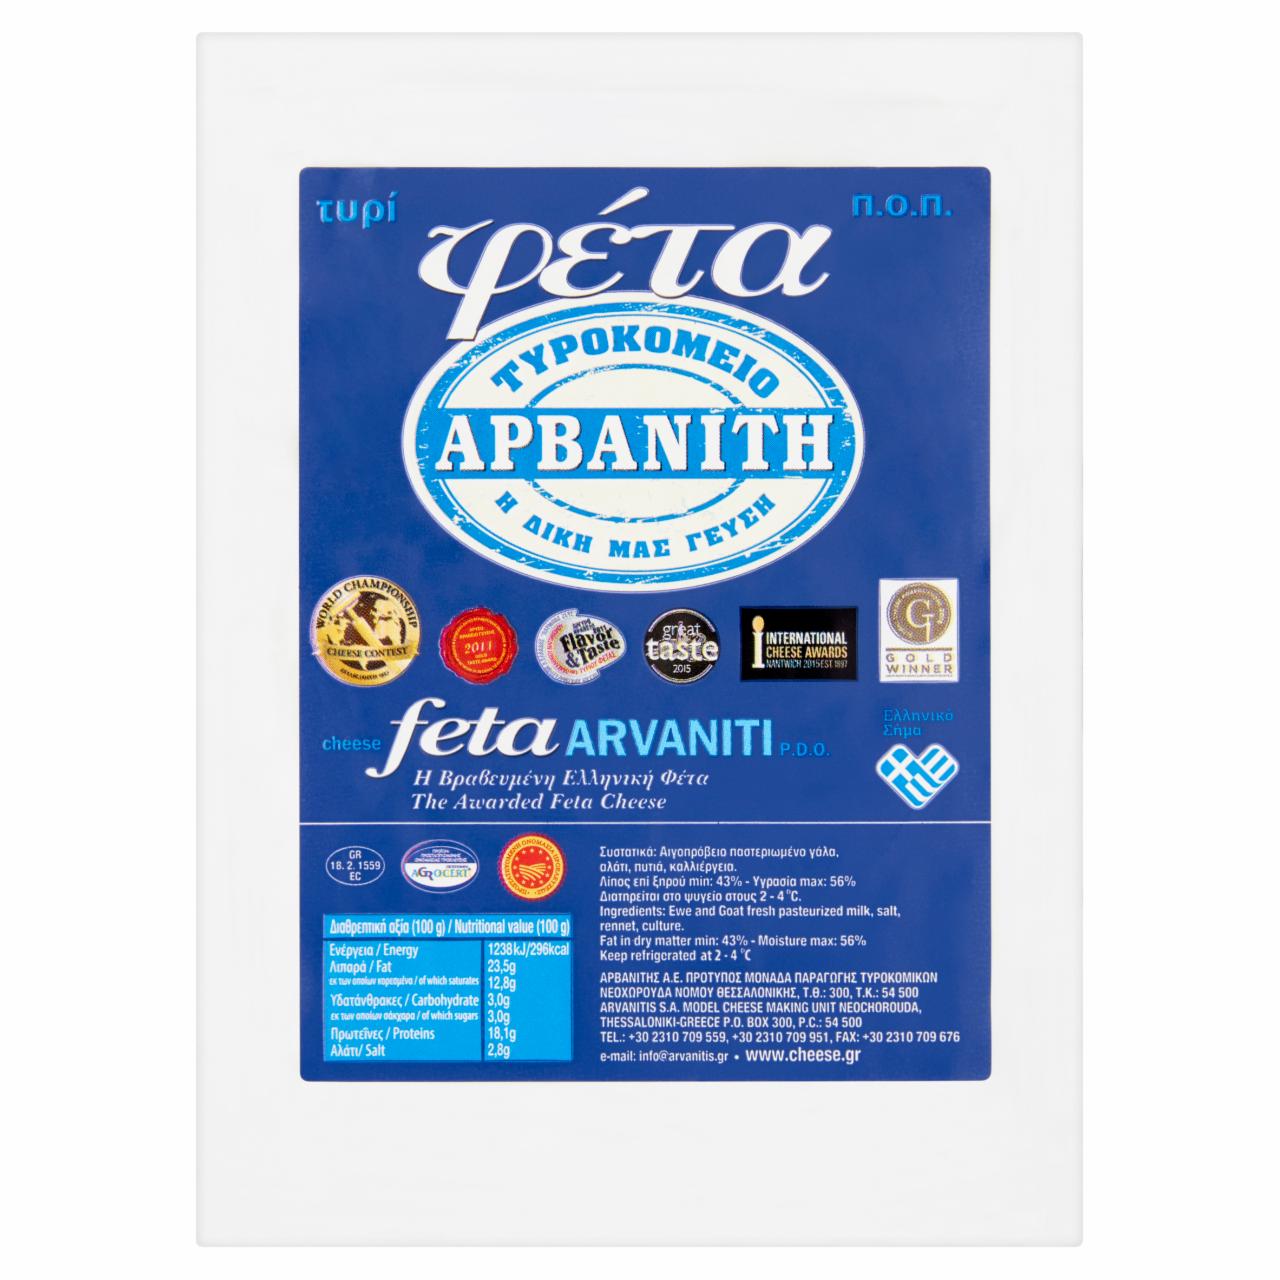 Képek - Arvaniti eredetvédett görög feta sajt sós lében 150 g